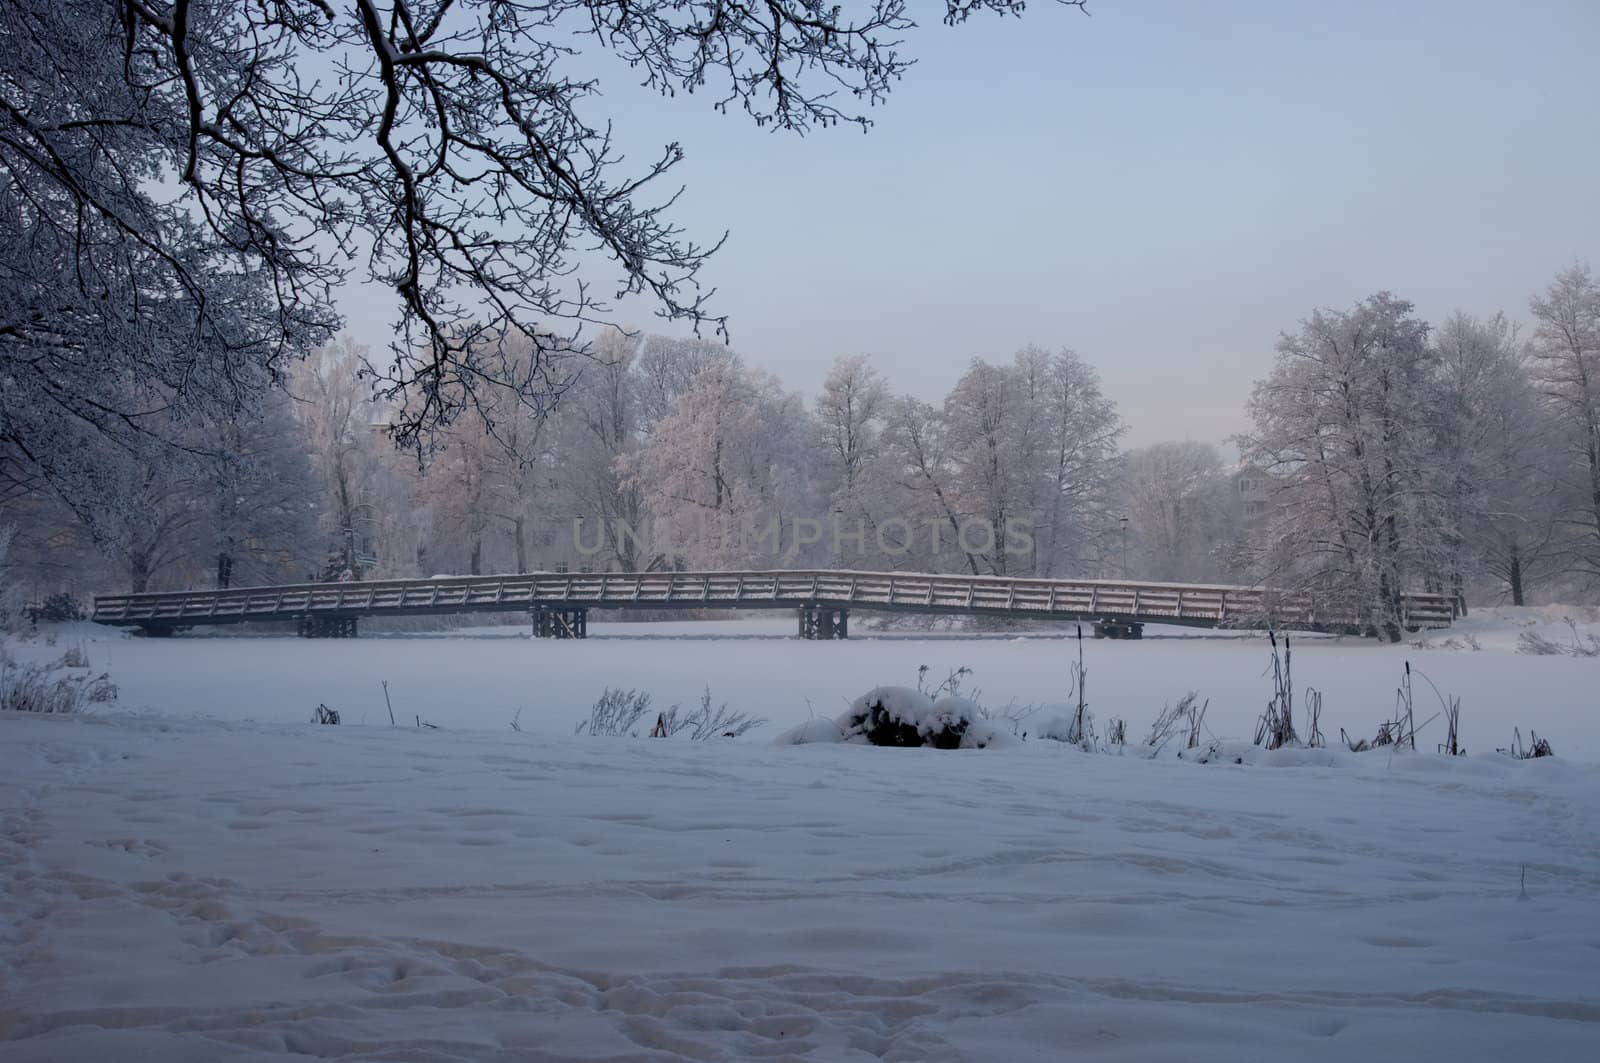 A wooden bridge over a frozen river a cold winter day.